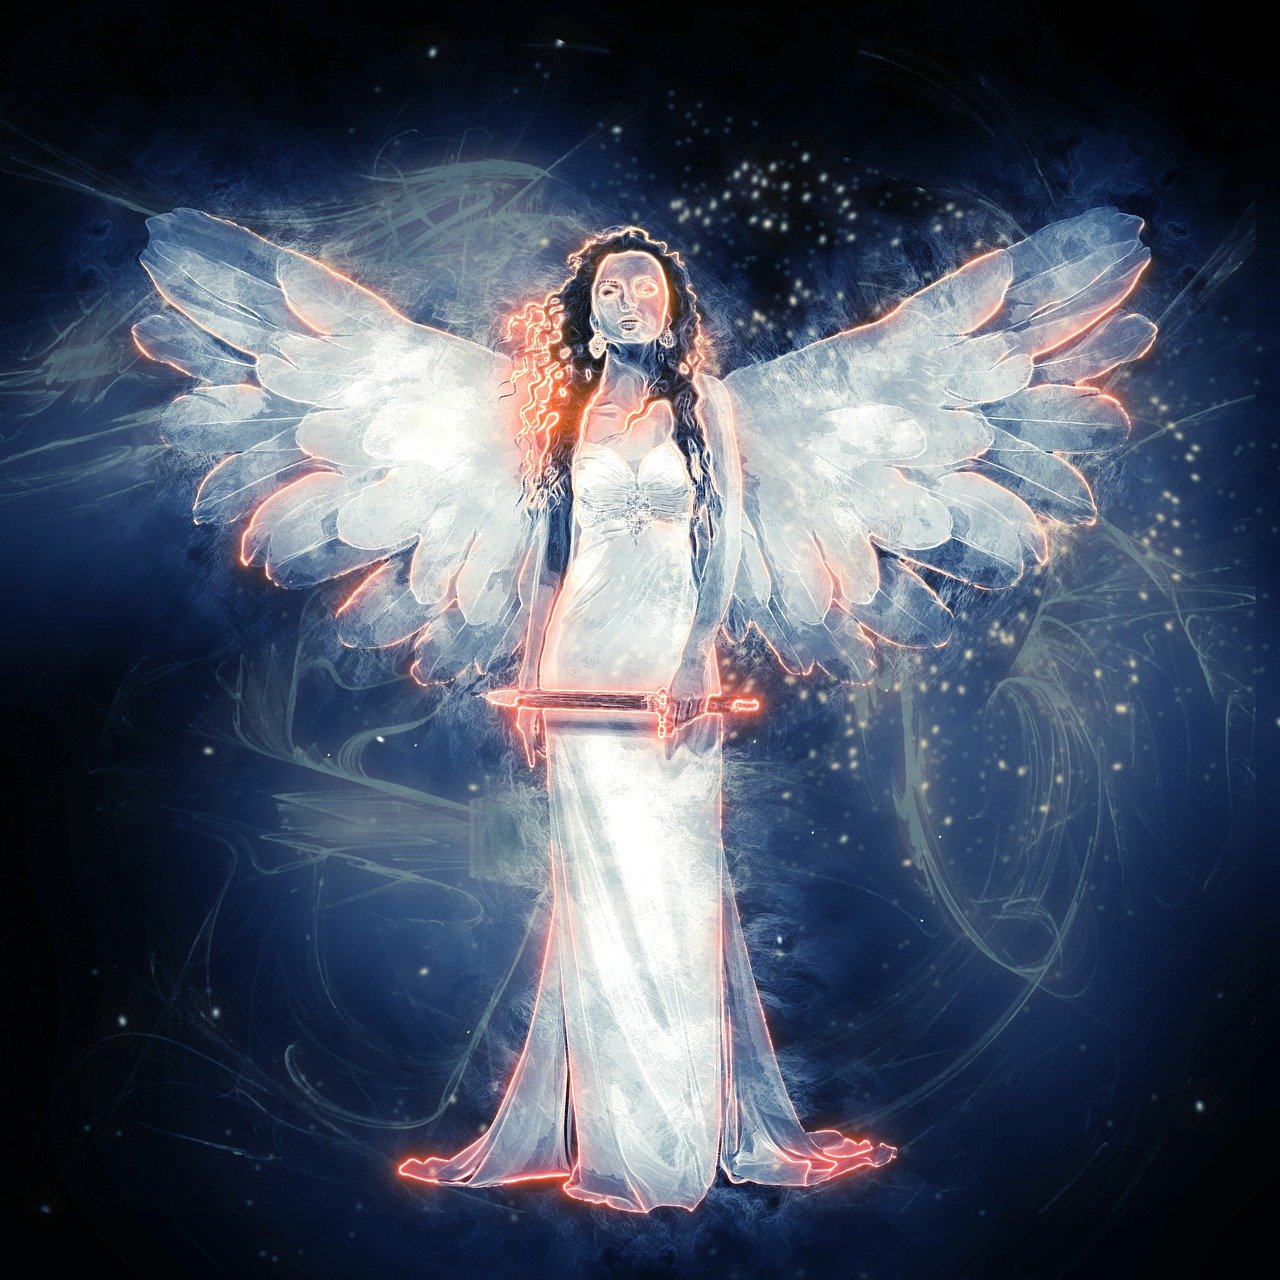 Angels women. Женщина ангел. Девушка - ангел. Женский образ ангела. Женщина с крыльями.